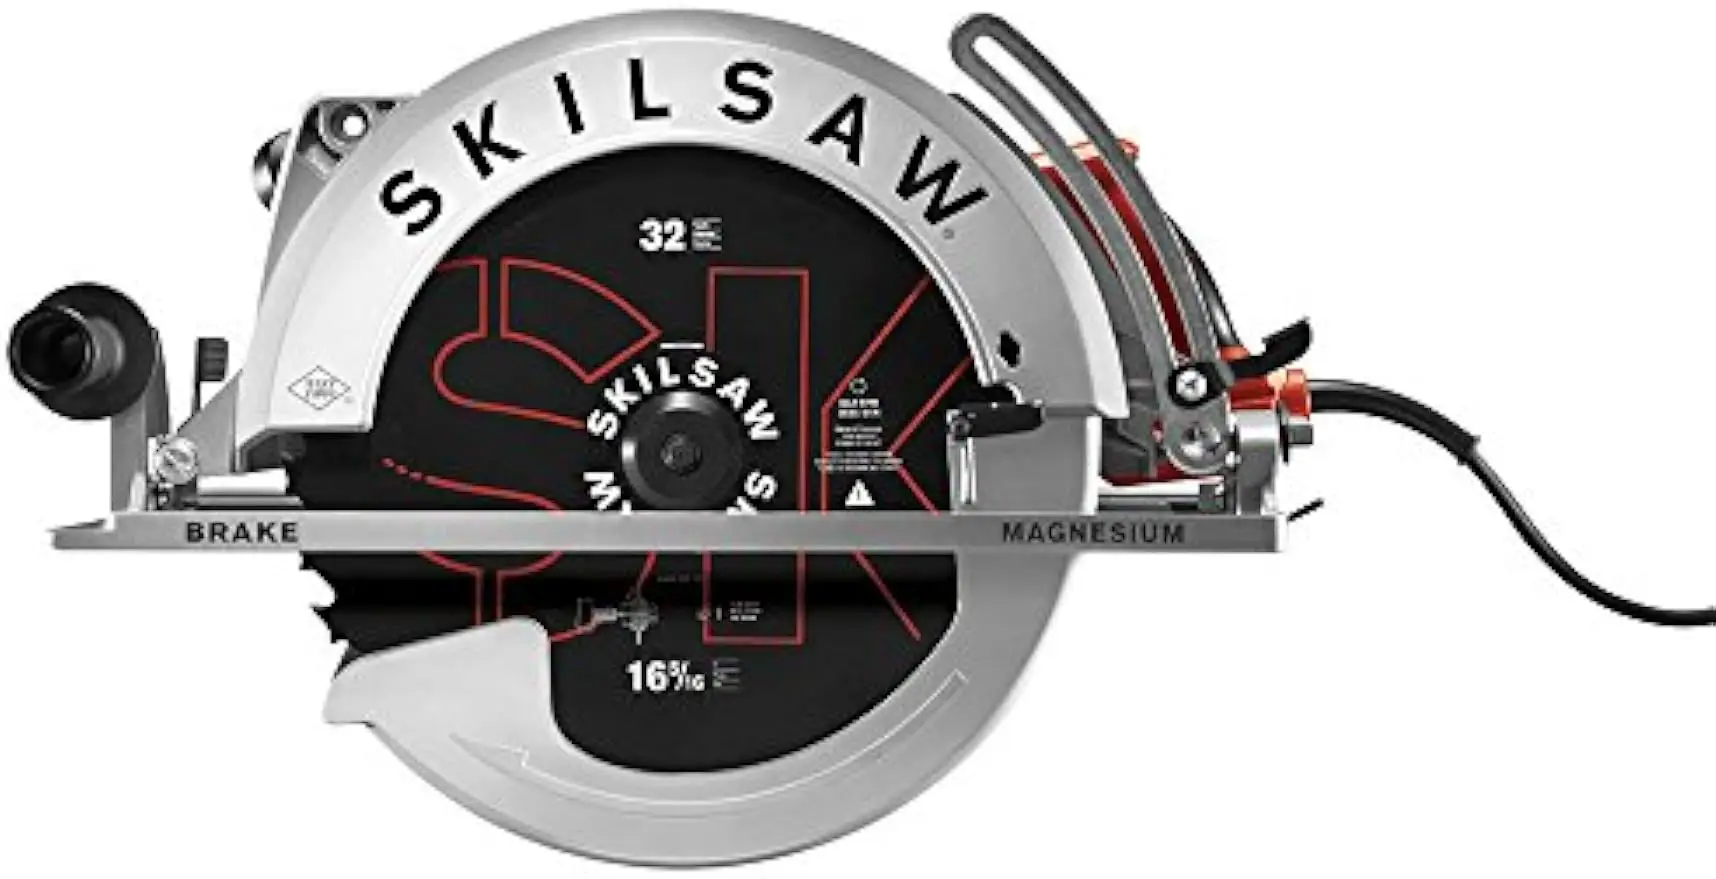 

SKIL 16-5/16 In. Magnesium Worm Drive Skilsaw Circular Saw - SPT70V-11